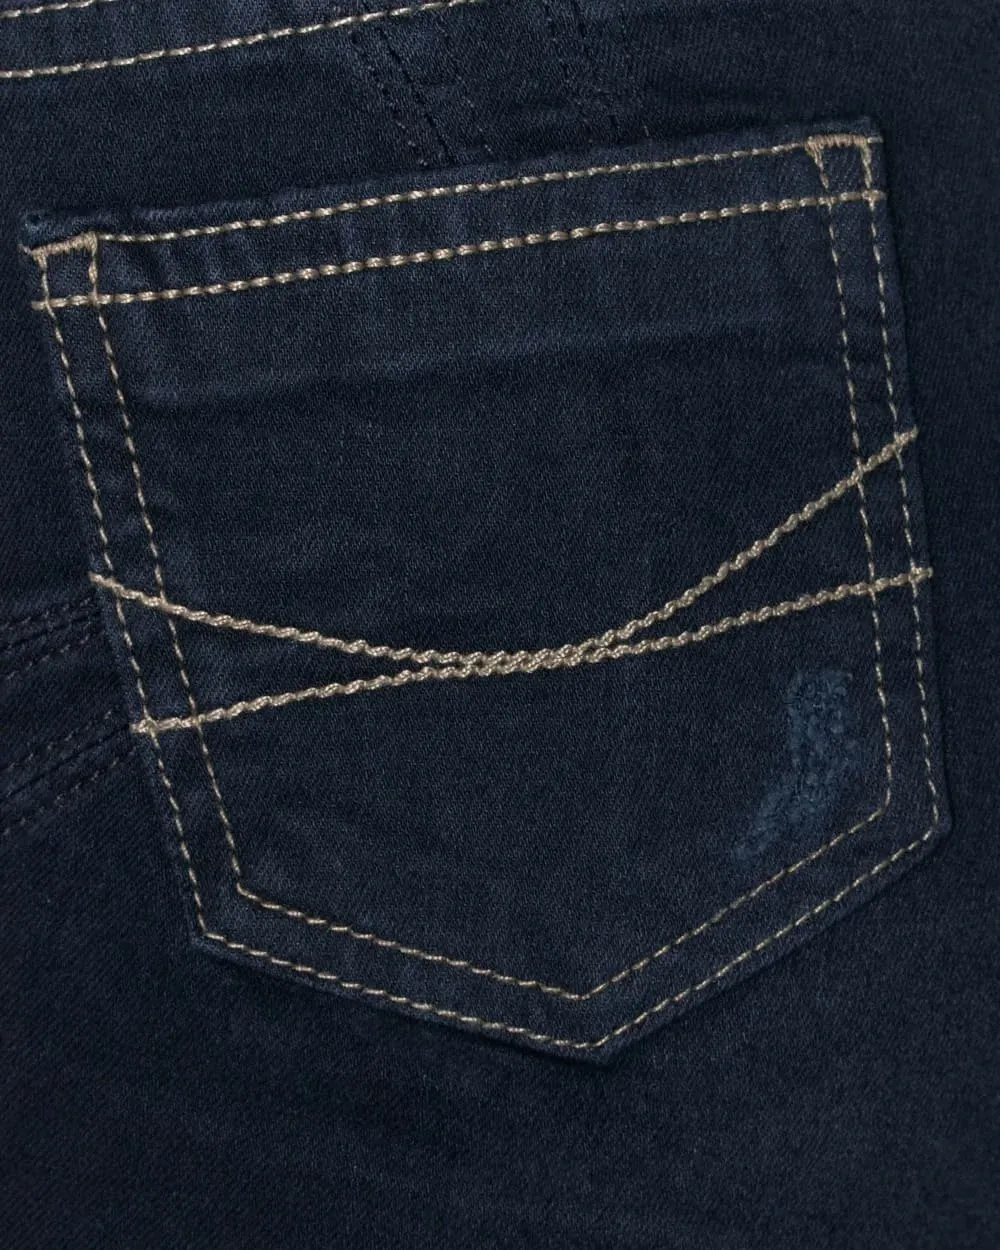 Jeans 451 skinny tiro alto rasgado azul